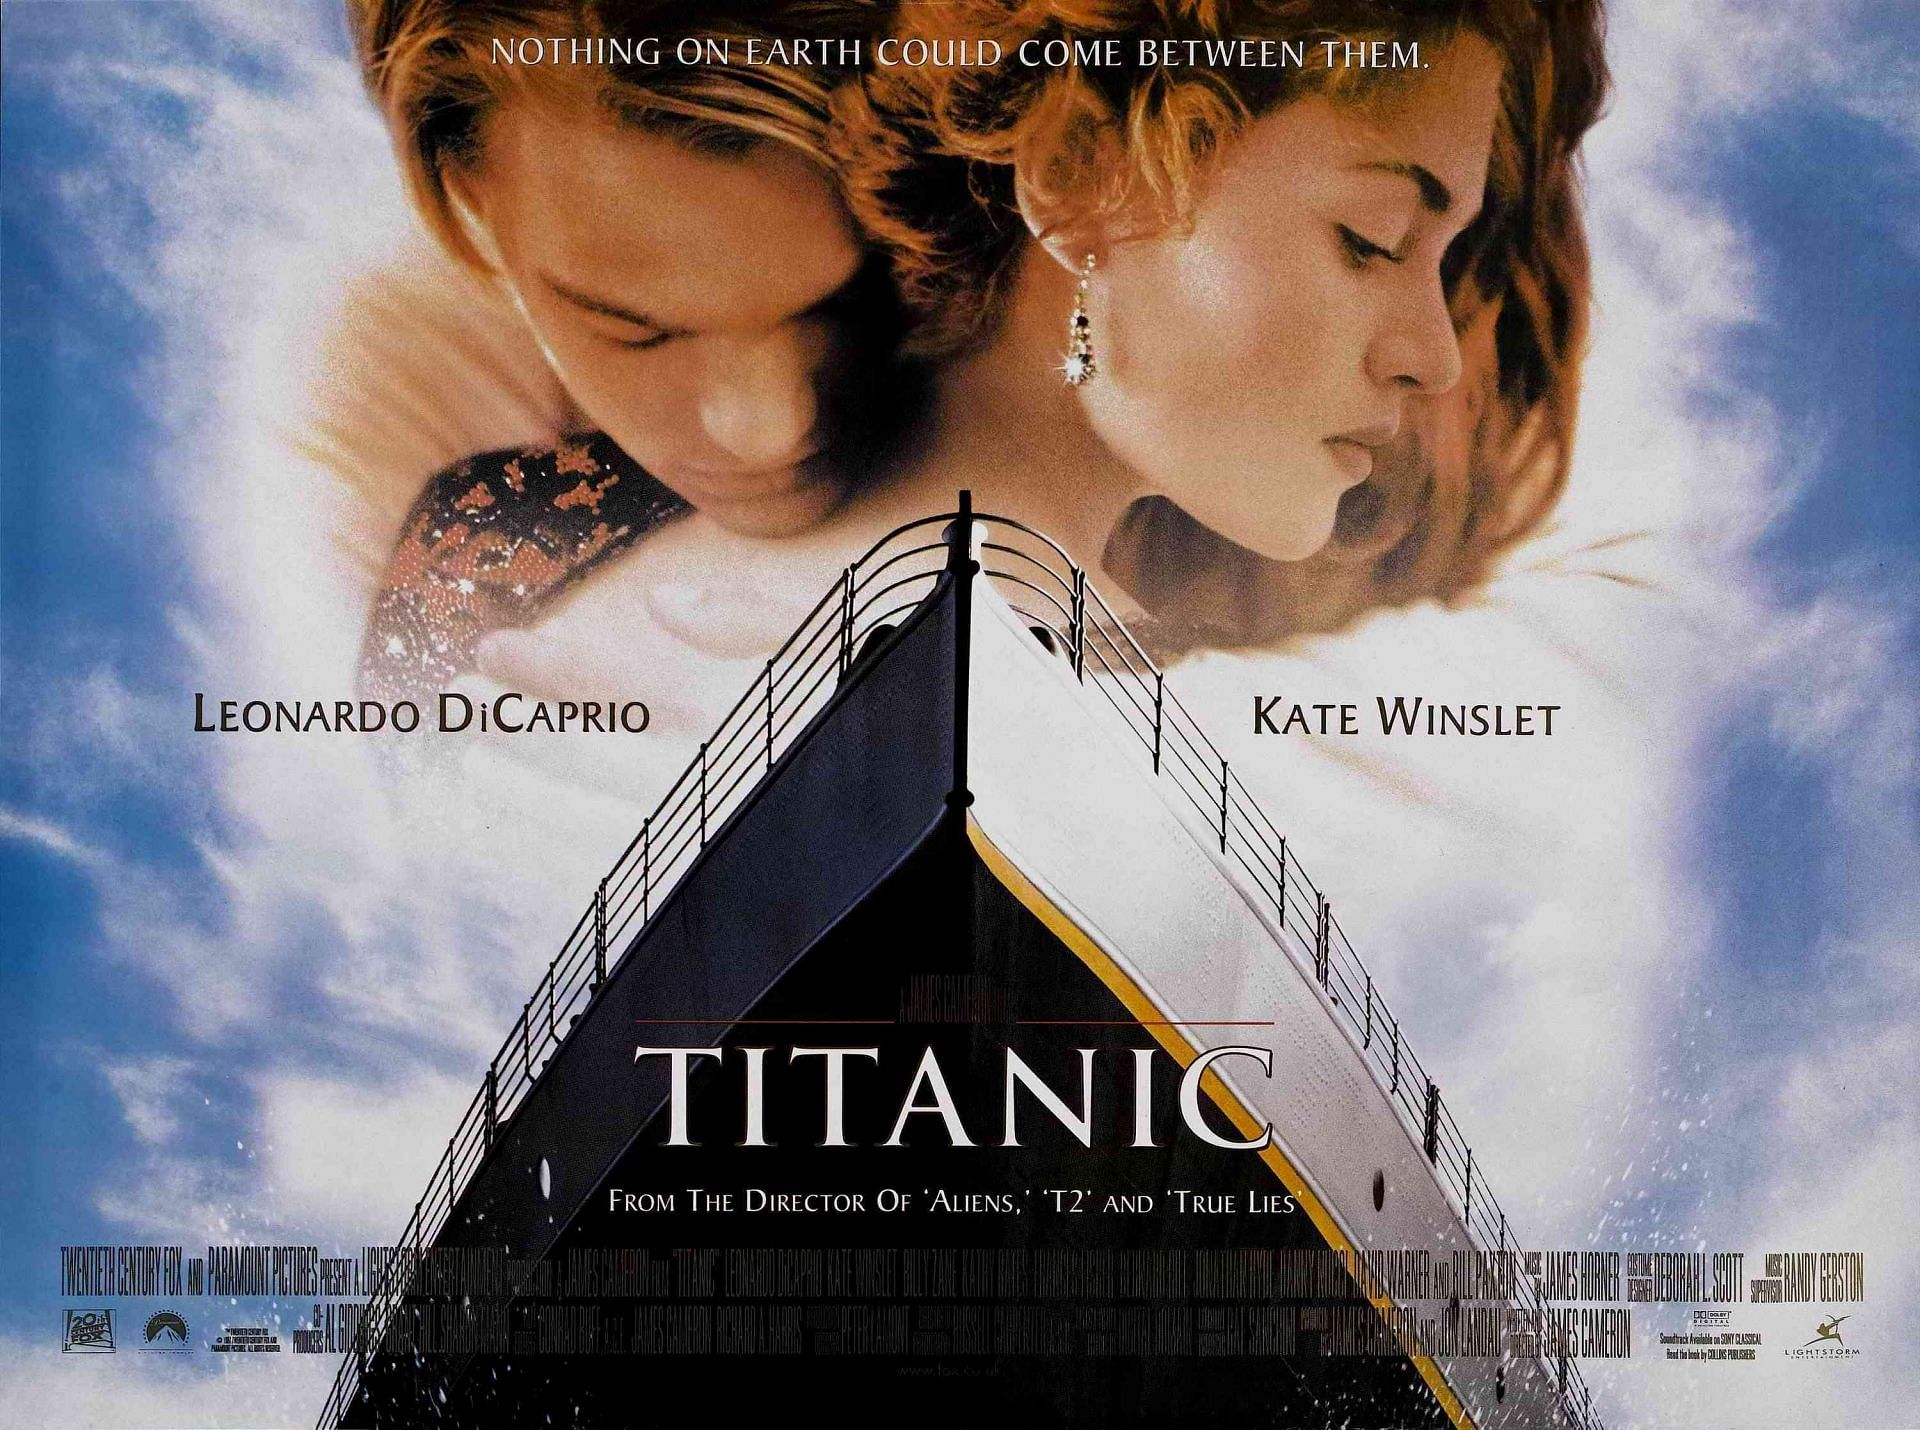 Titanic (Image via 20th Century Studios)